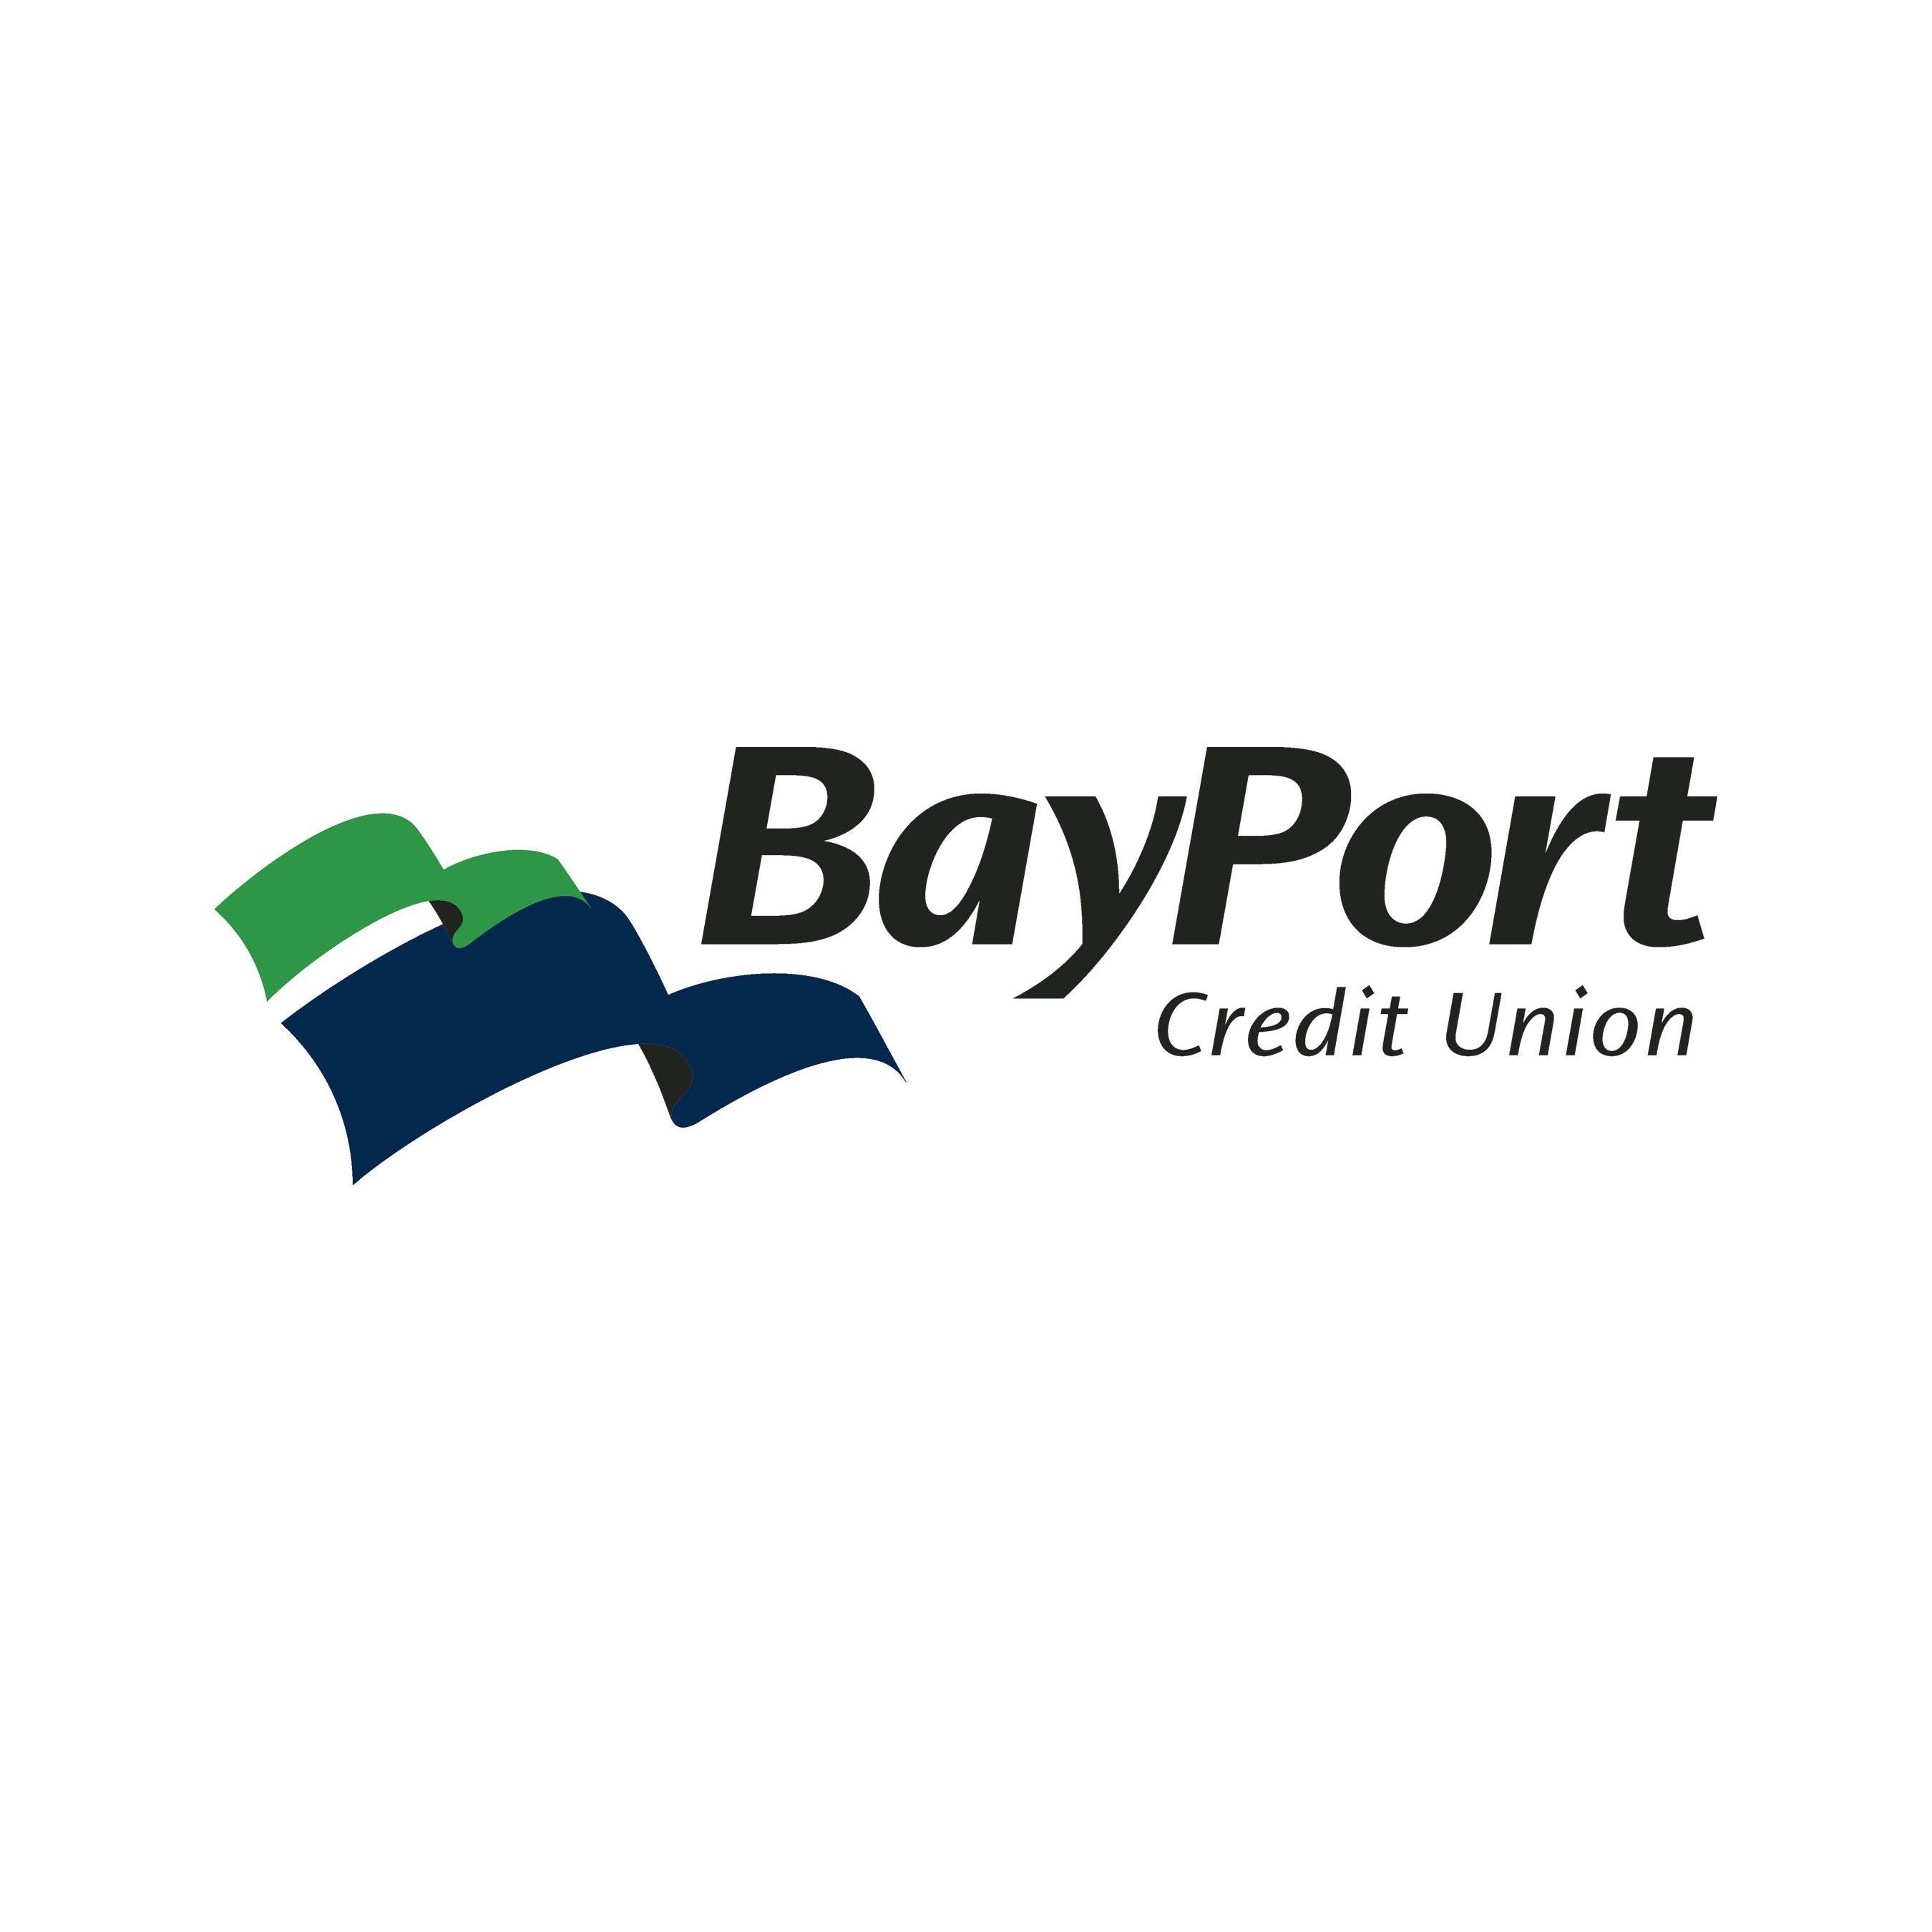 Bayport Credit Union